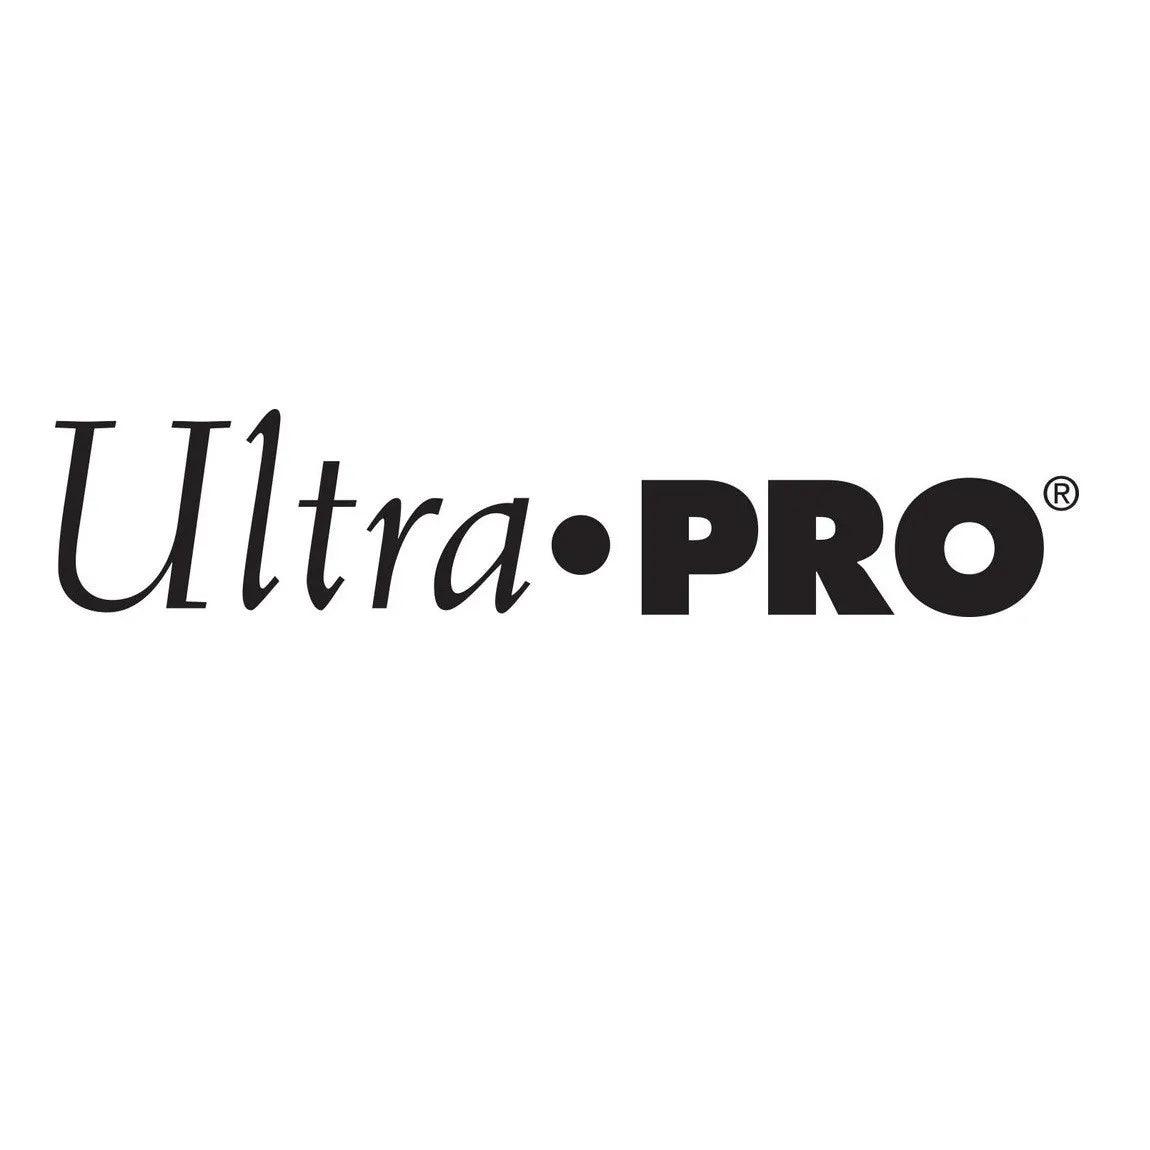 Ultra PRO - Album/Binder/Portfolio - 3" Hockey (Black Color) - Hobby Champion Inc